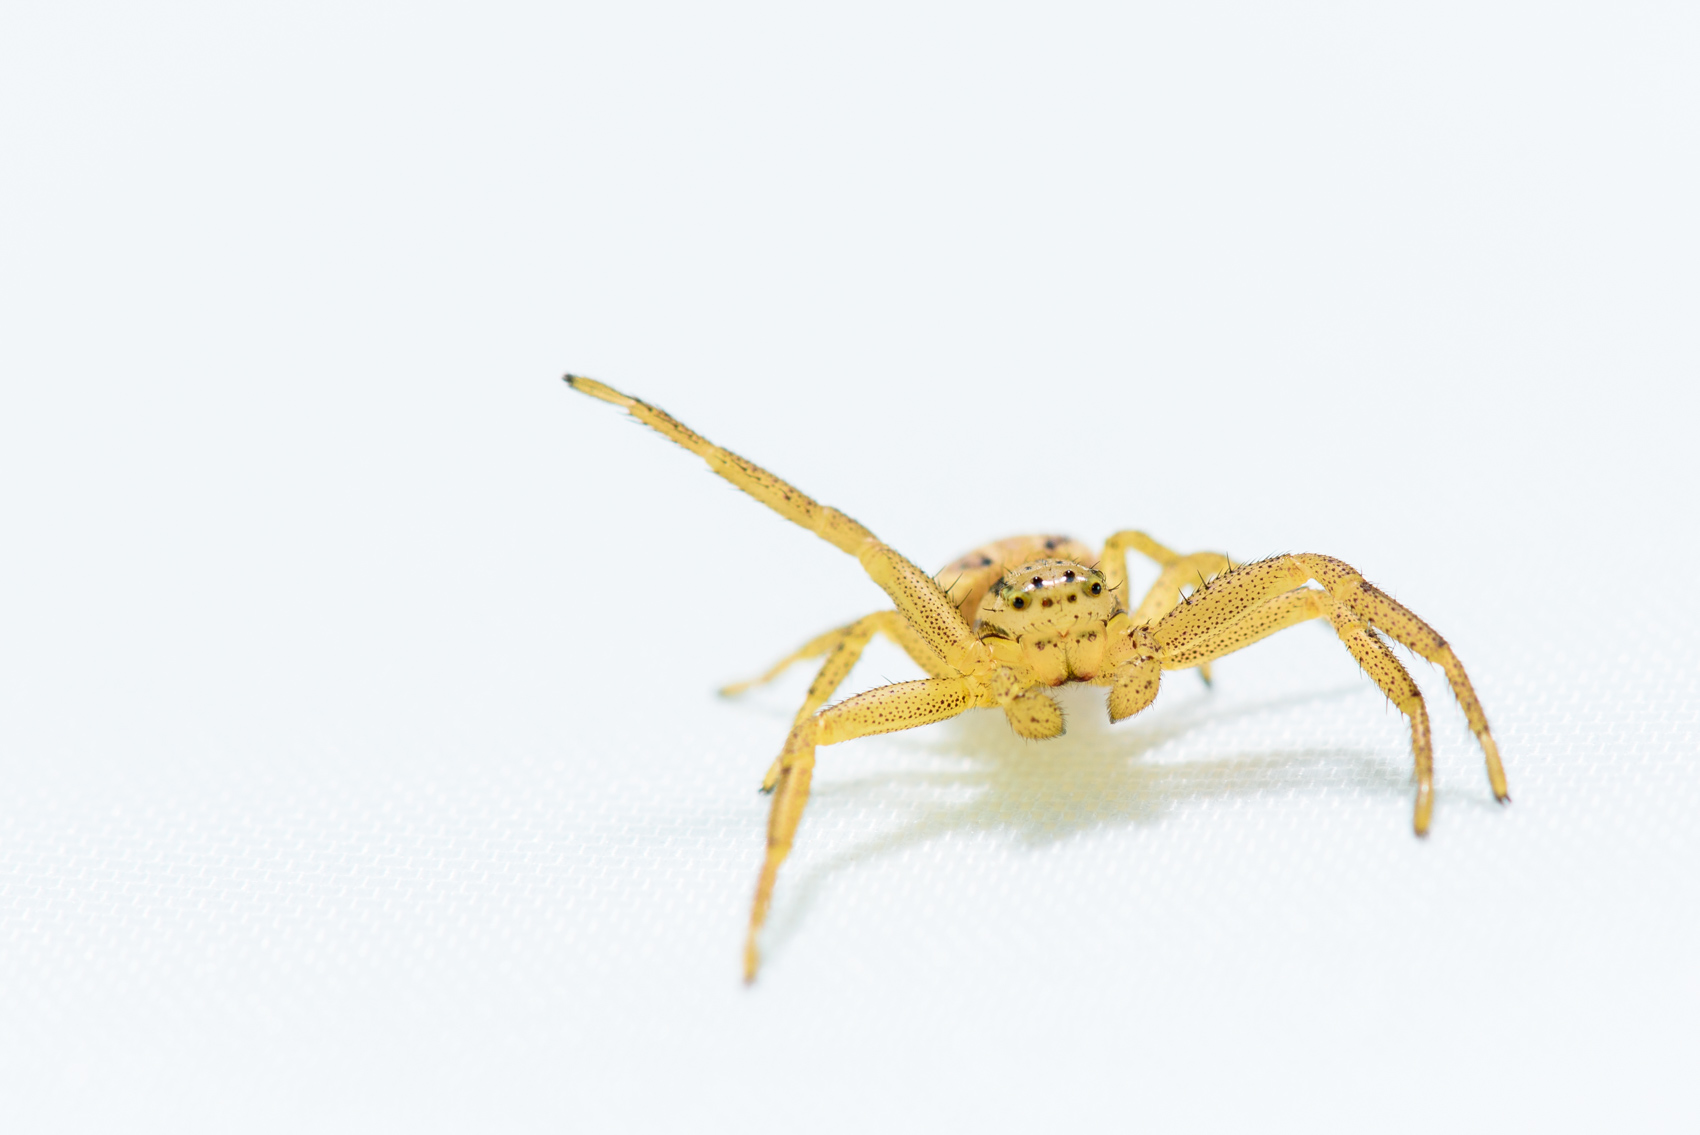 Crab spider raising a leg on a white background